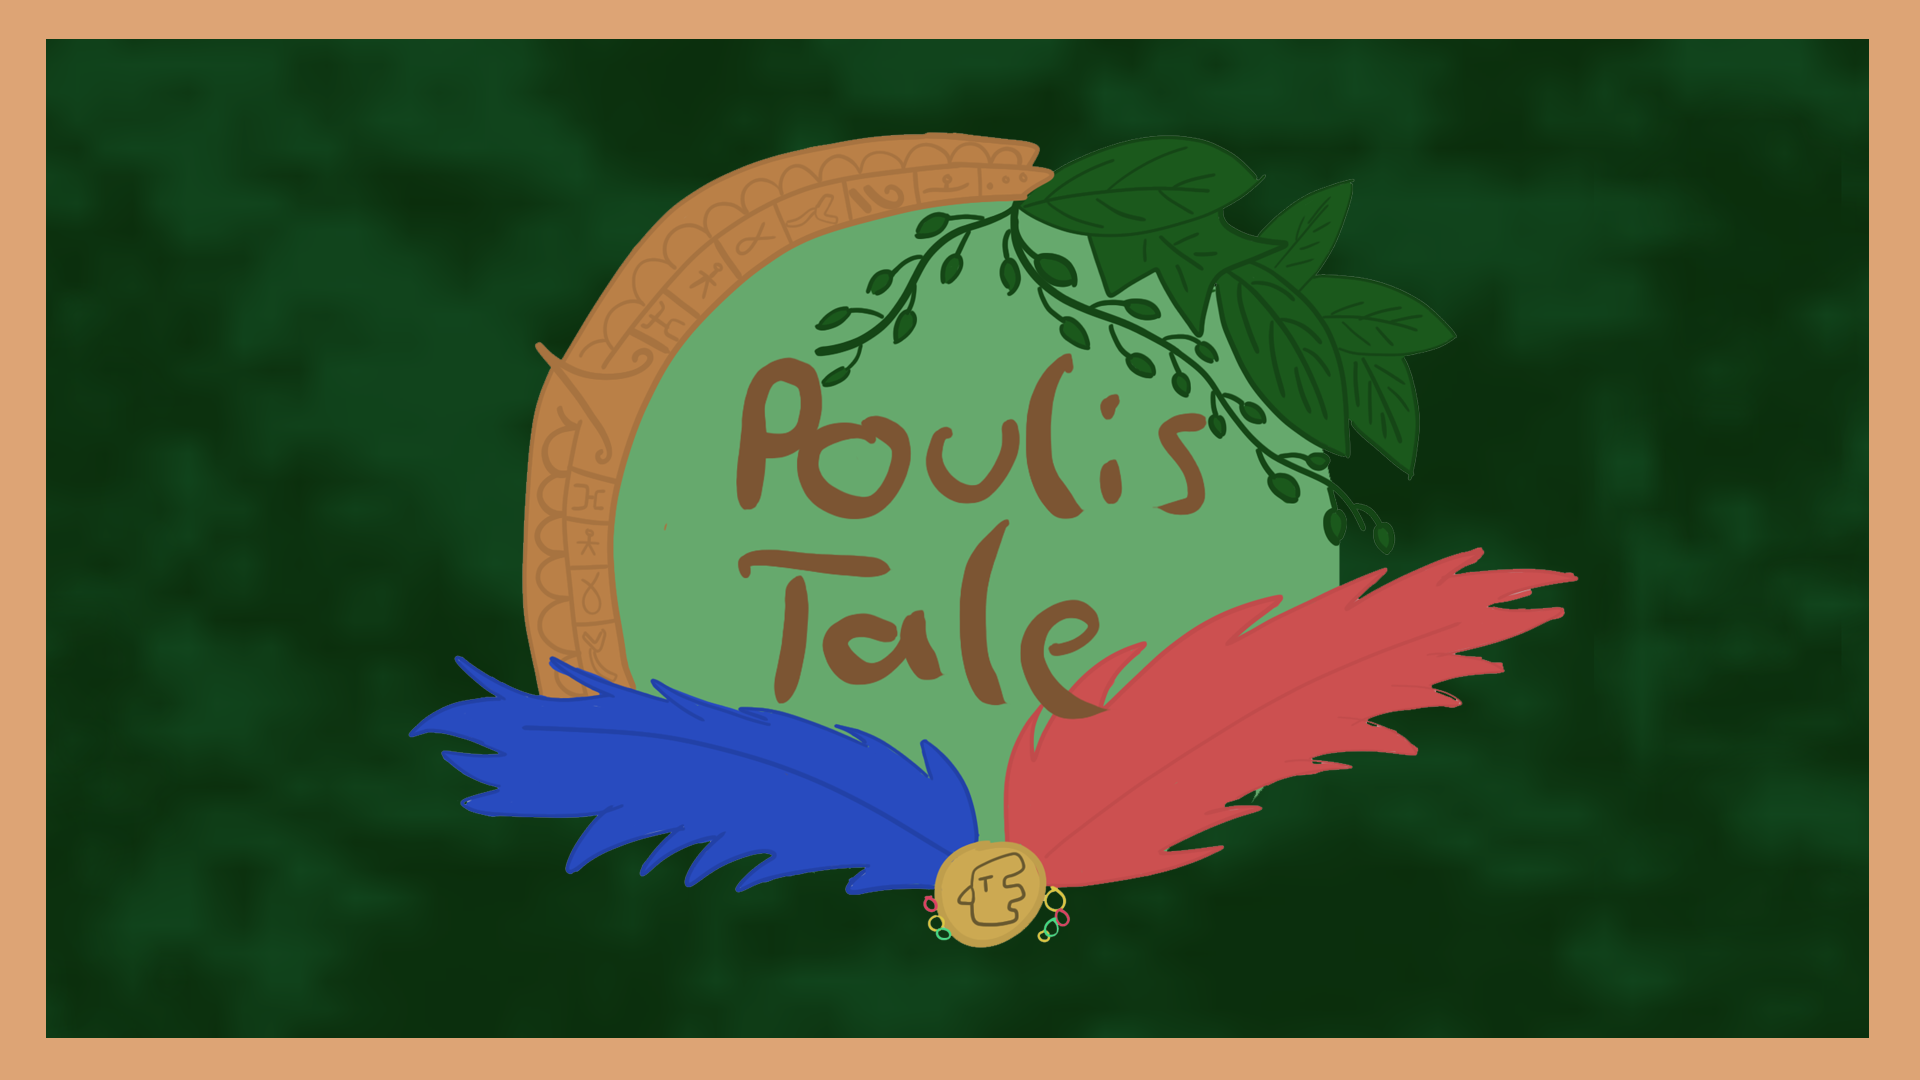 Pouli's Tale